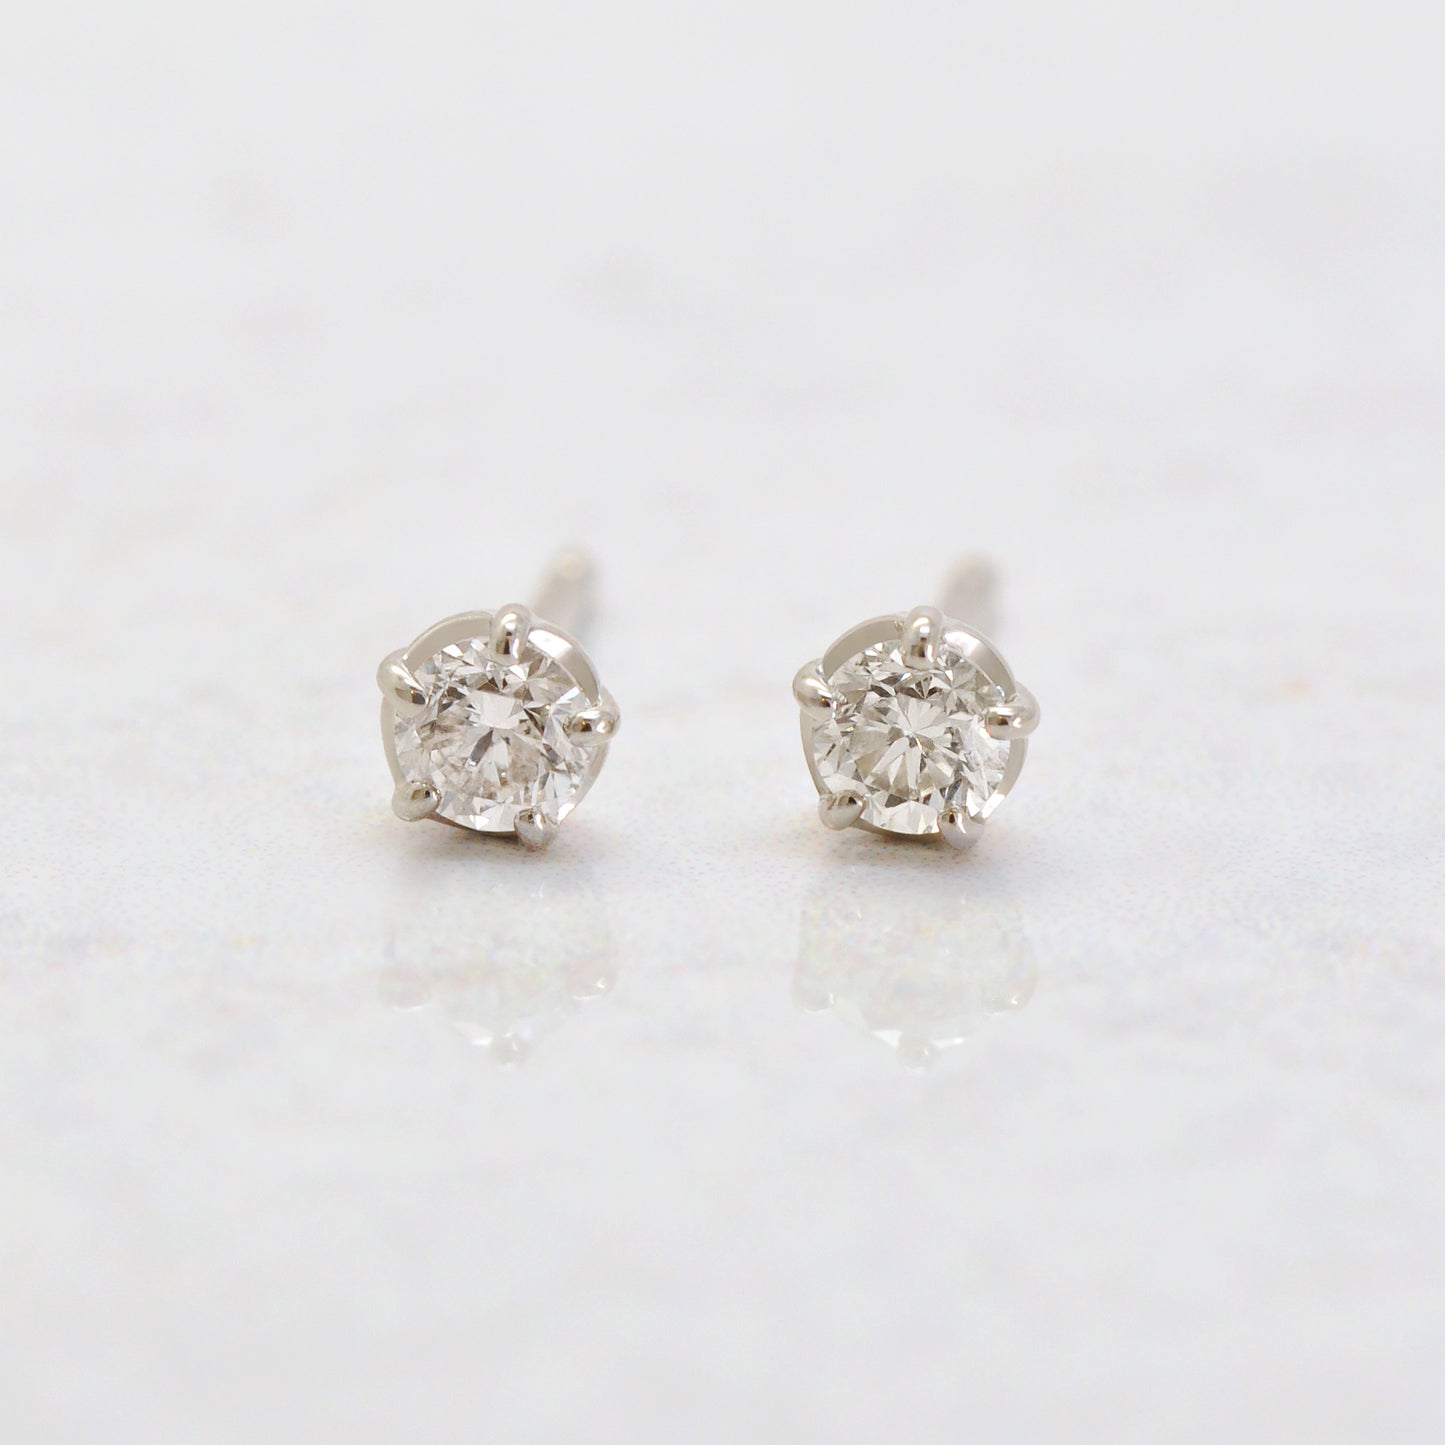 [Second Earrings] Platinum Diamond Earrings 0. 30ct - Product Image